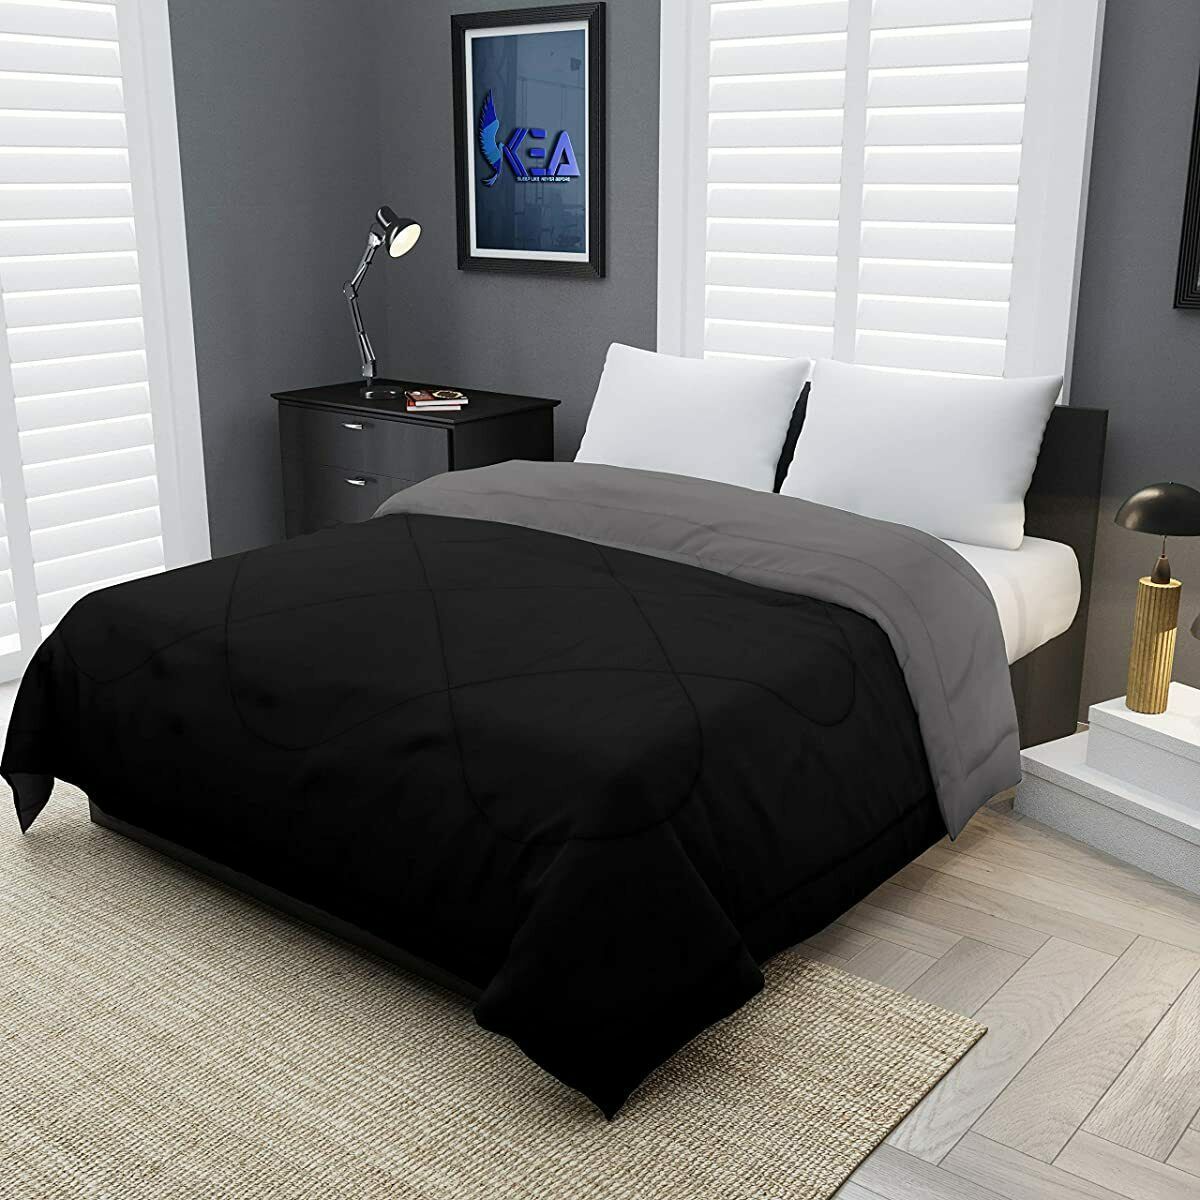 Reversible Single & Double Bed King Size Comforter| Duvet | Cotton 300 GSM